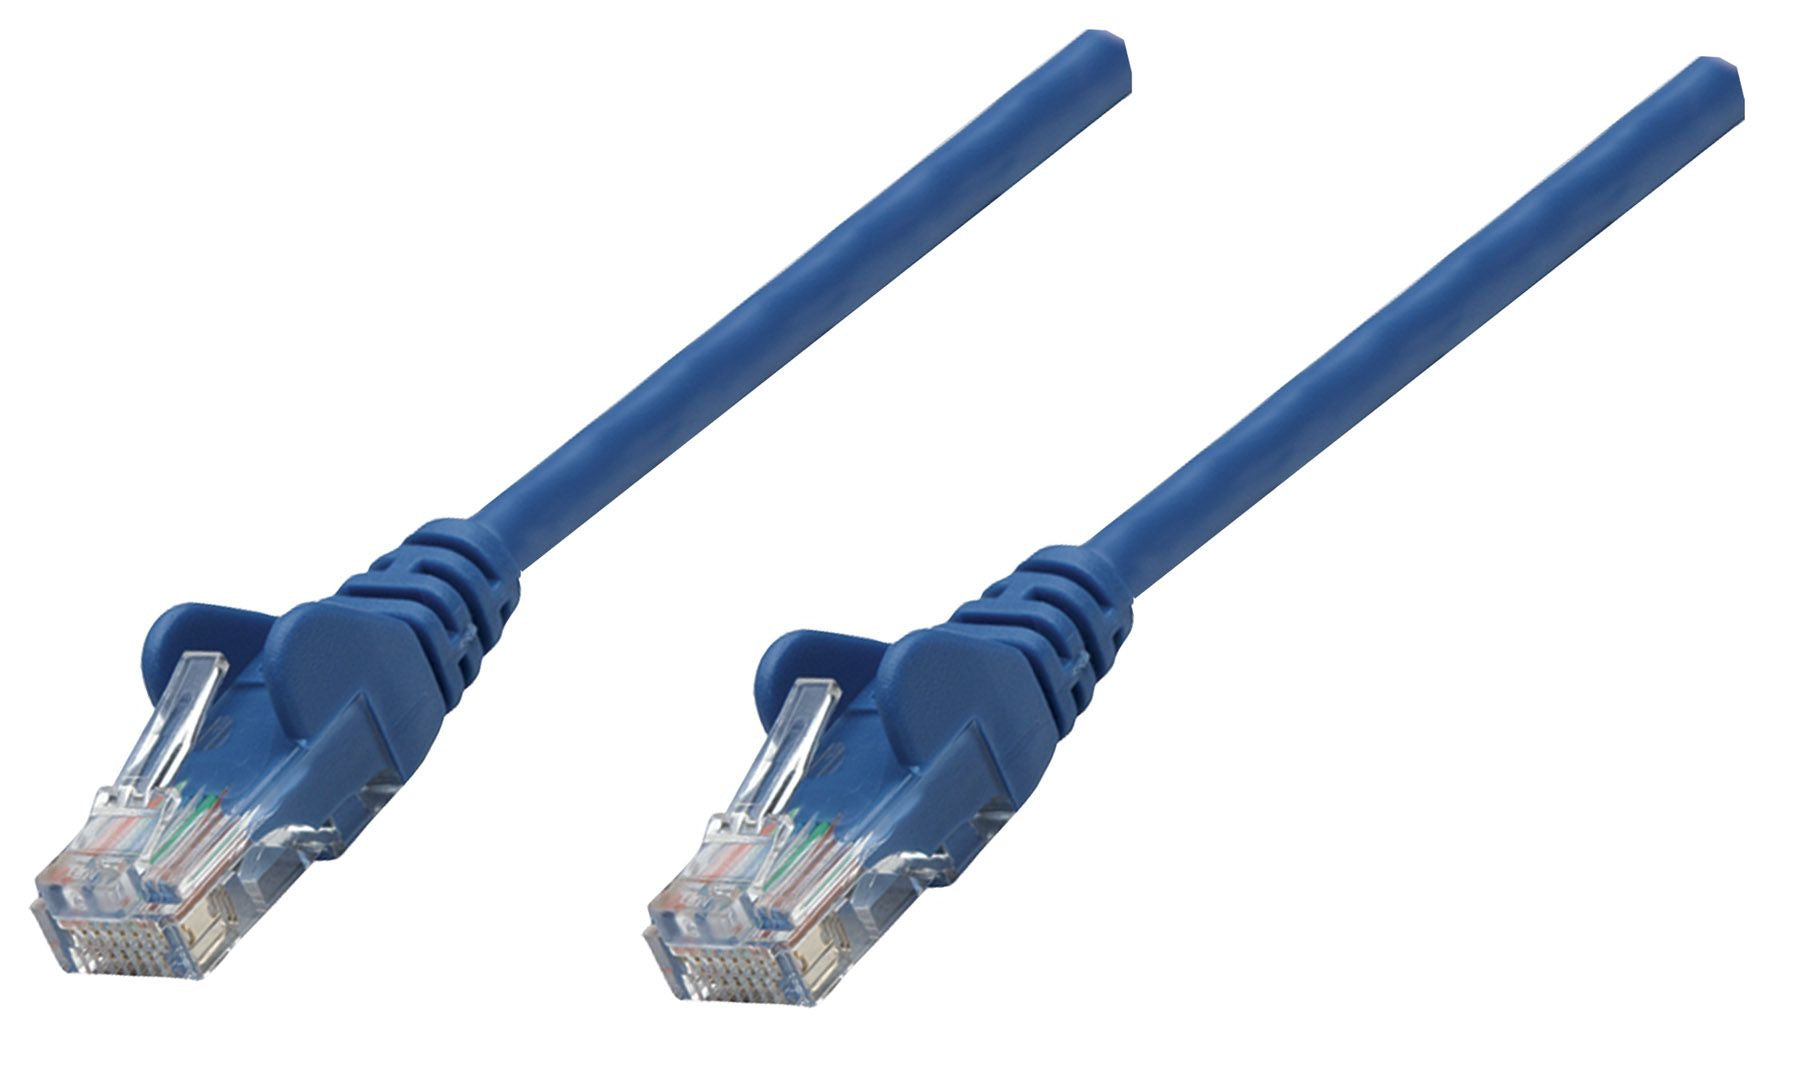 Cable De Red Cat6A S/Ftp Intellinet 741491 3.0 M Azulcon Blindaje Trenzado Aluminio Y Lámina Mylar Alrededor Cada Par.